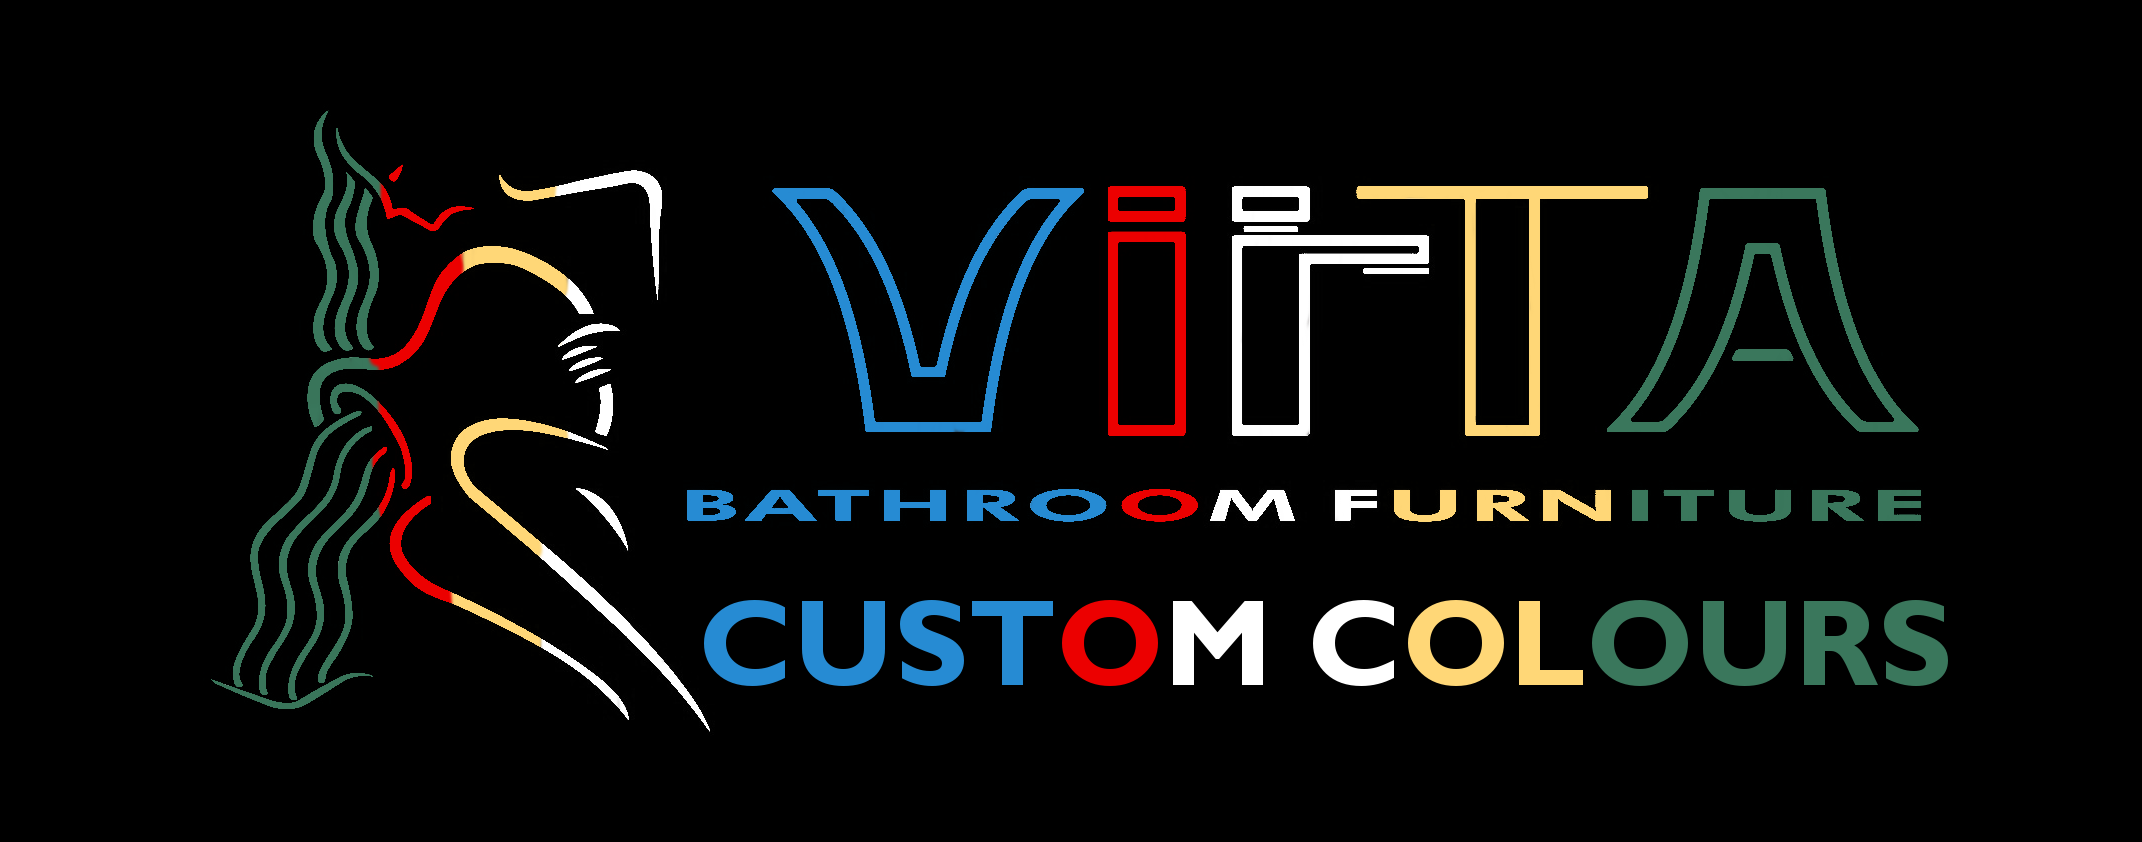 custom color virta logo black background